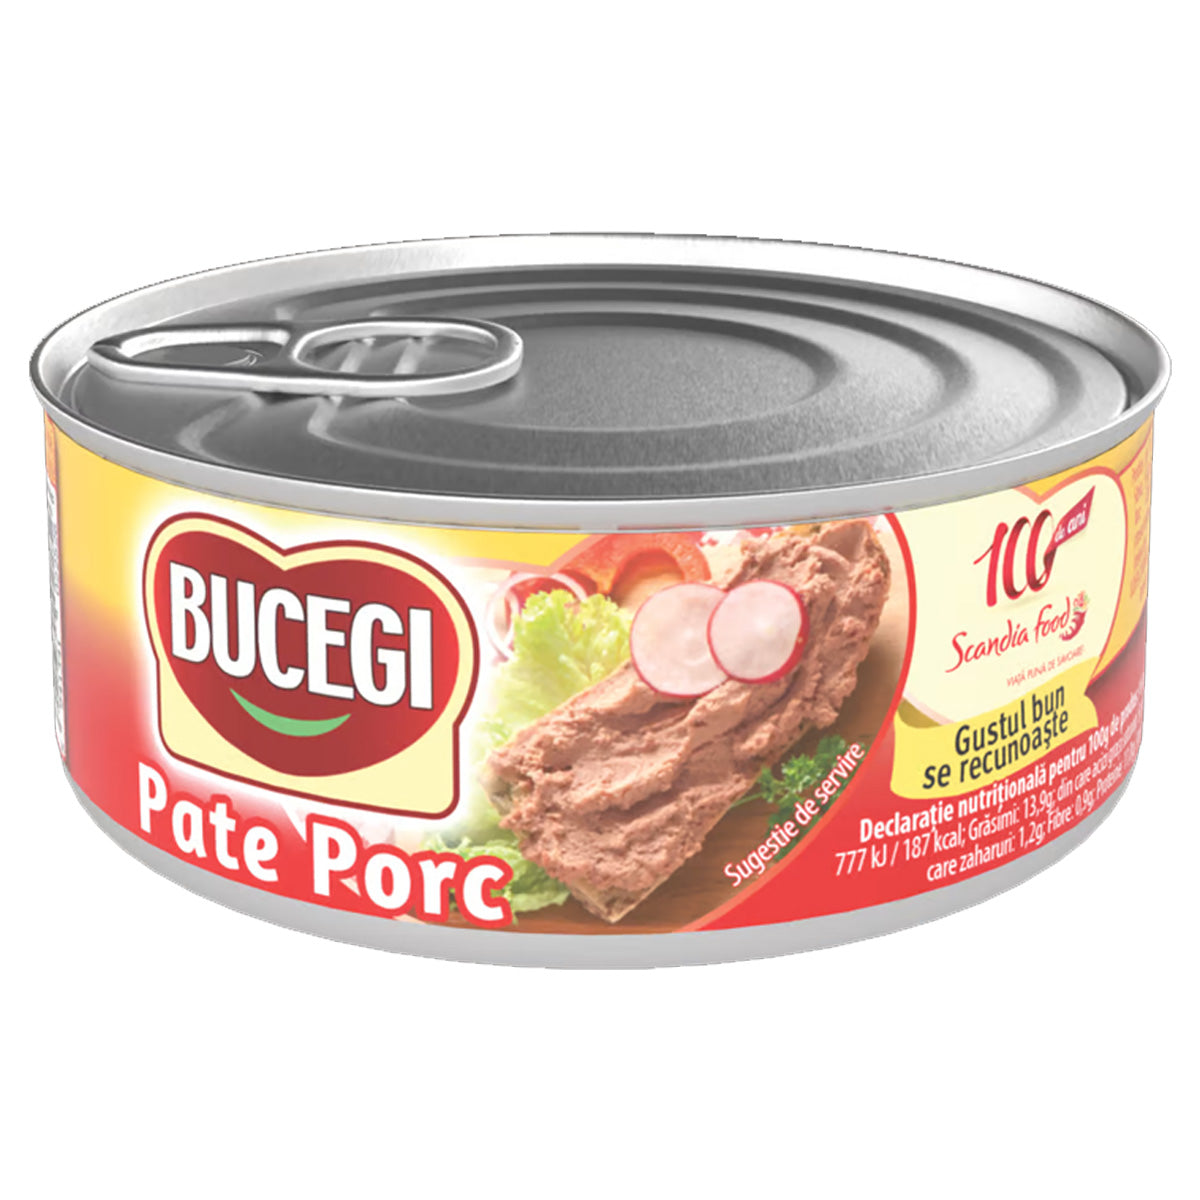 Bucegi - Pork Liver Pate (Pate Porc) - 120g - Continental Food Store